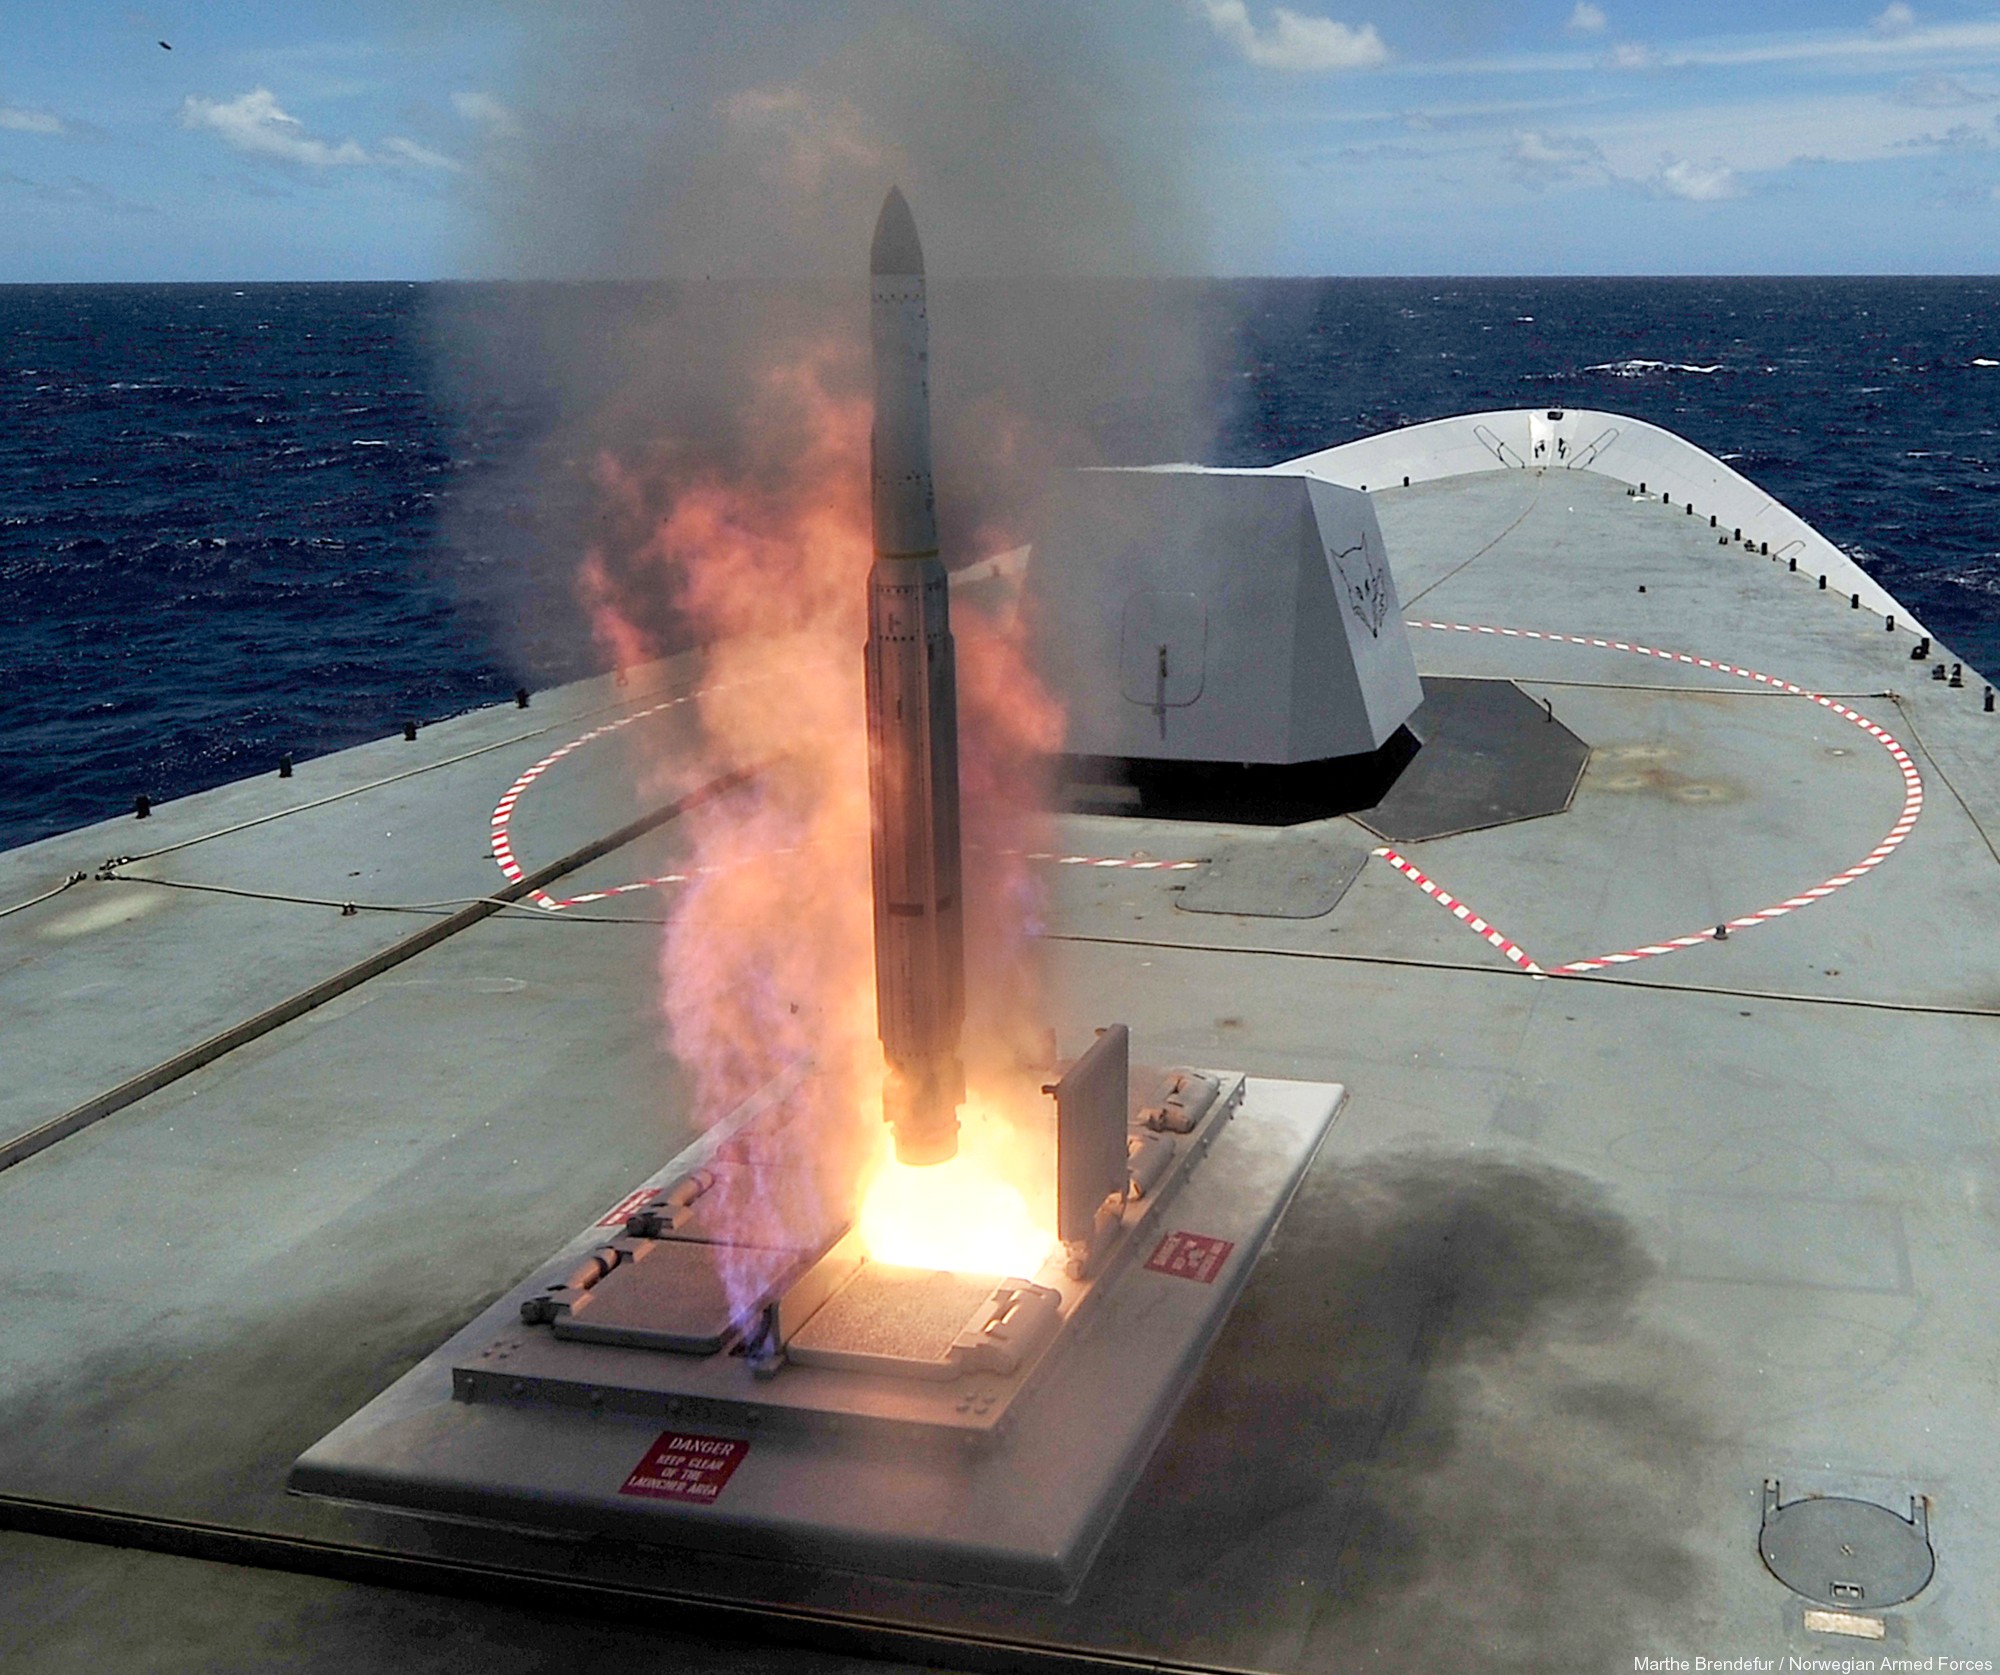 f-310 fridtjof nansen hnoms knm frigate royal norwegian navy sjoforsvaret 52 rim-162 evolved sea sparrow missile essm mk-41 vls